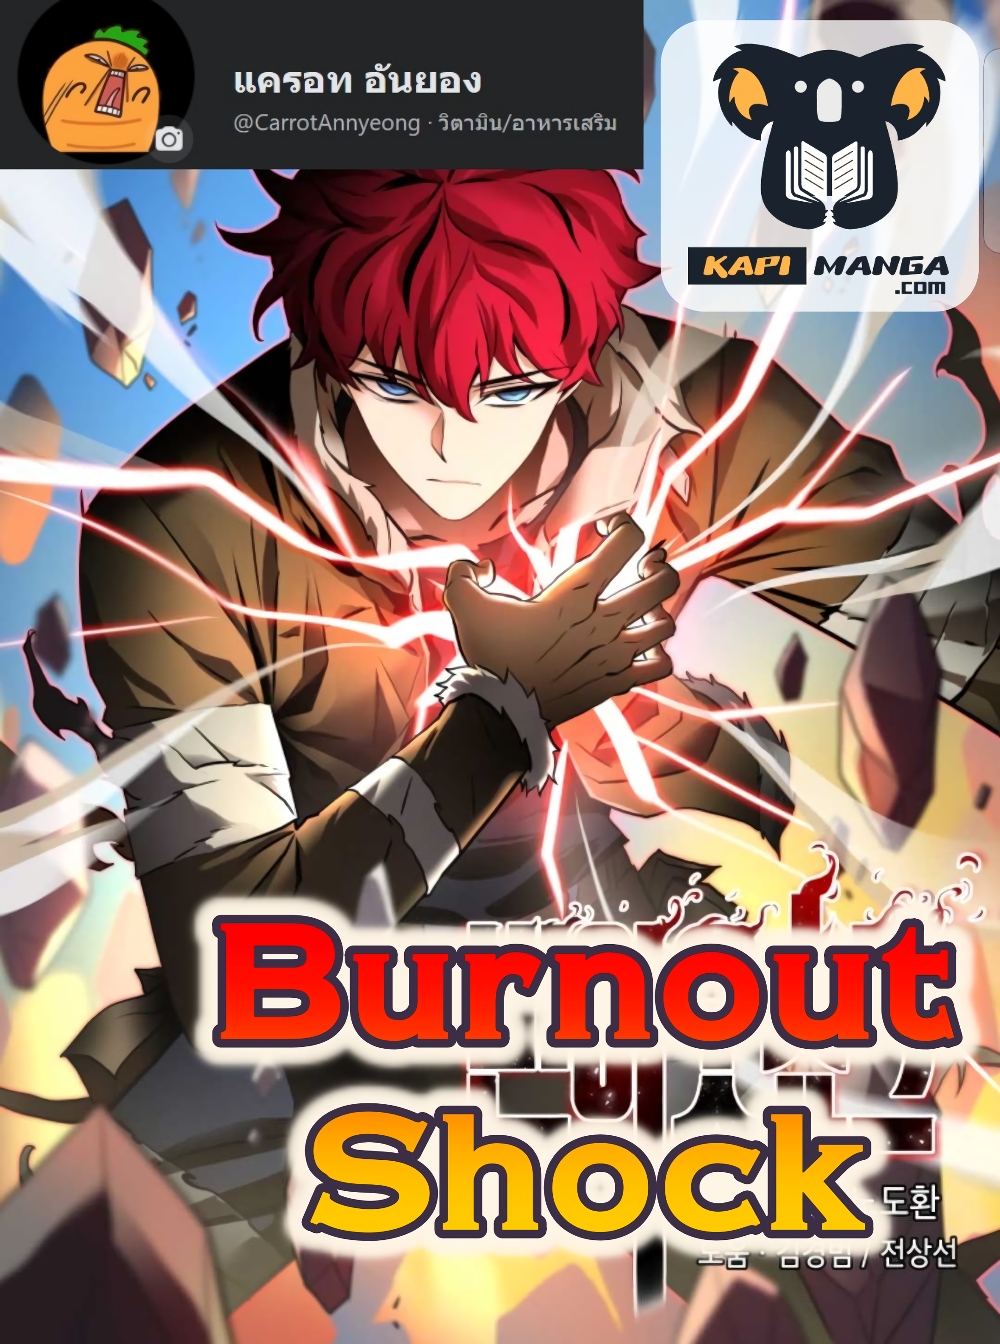 Burnout Shock15 (1)